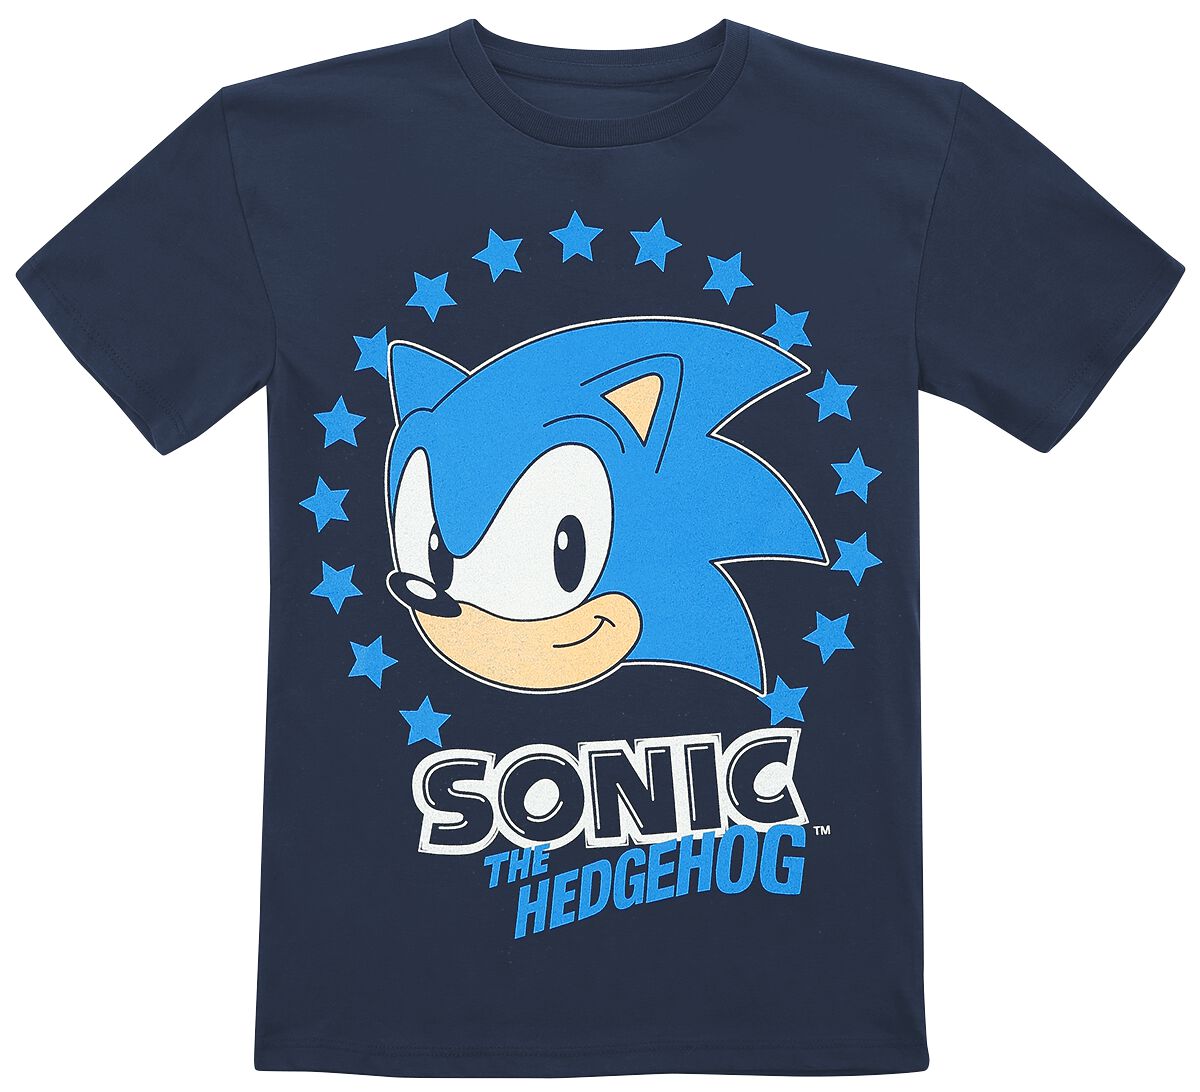 Sonic The Hedgehog Kids - Stars T-Shirt blau in 116